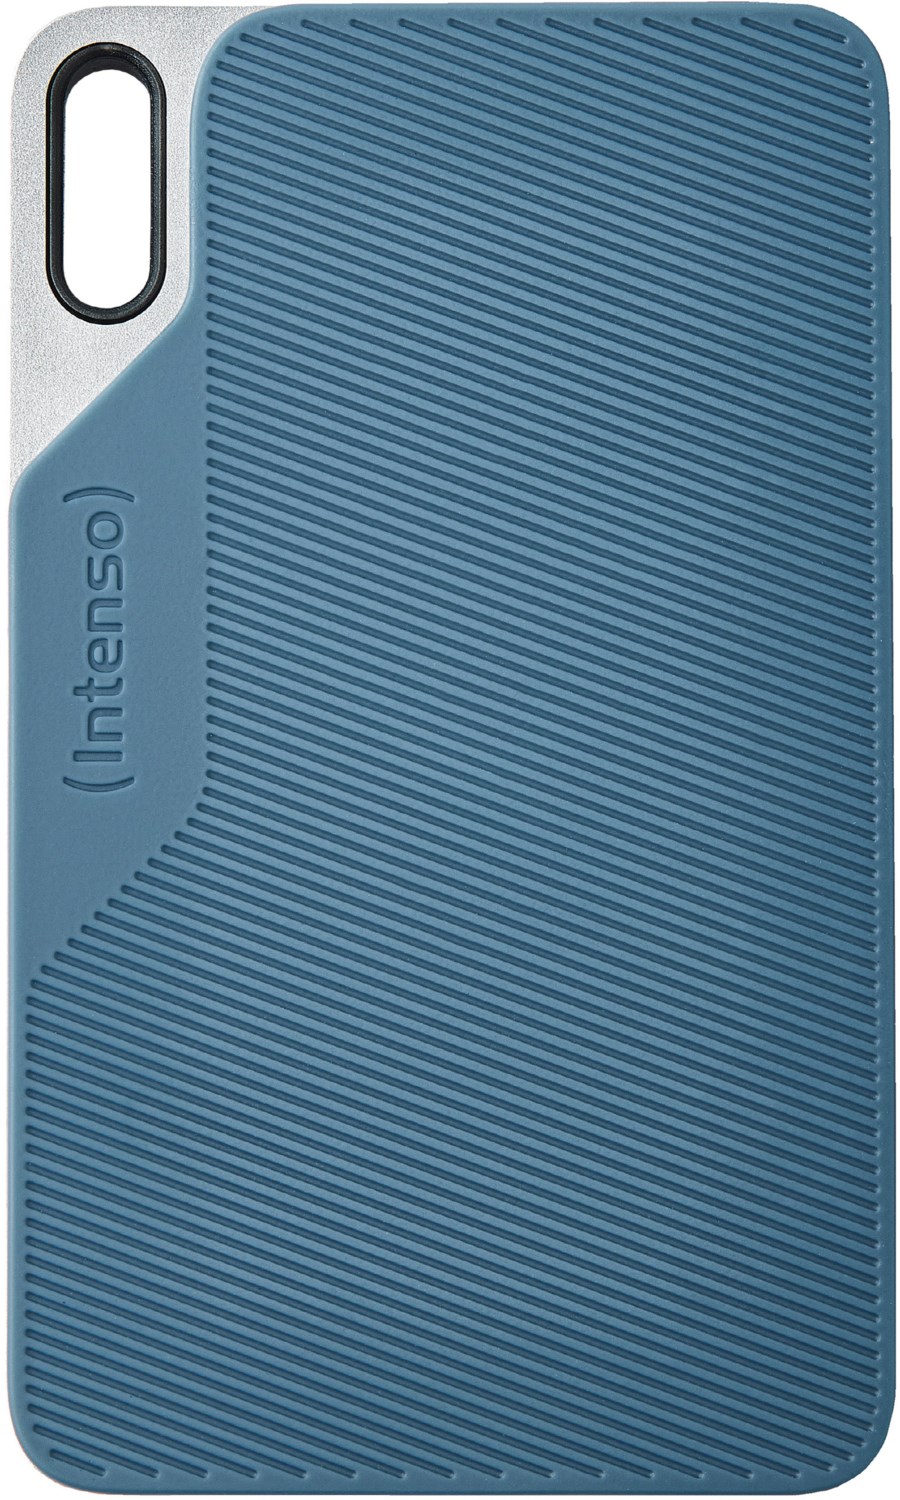 TX100 USB 3.2 Gen 1 (250GB) Externe SSD grau-blau